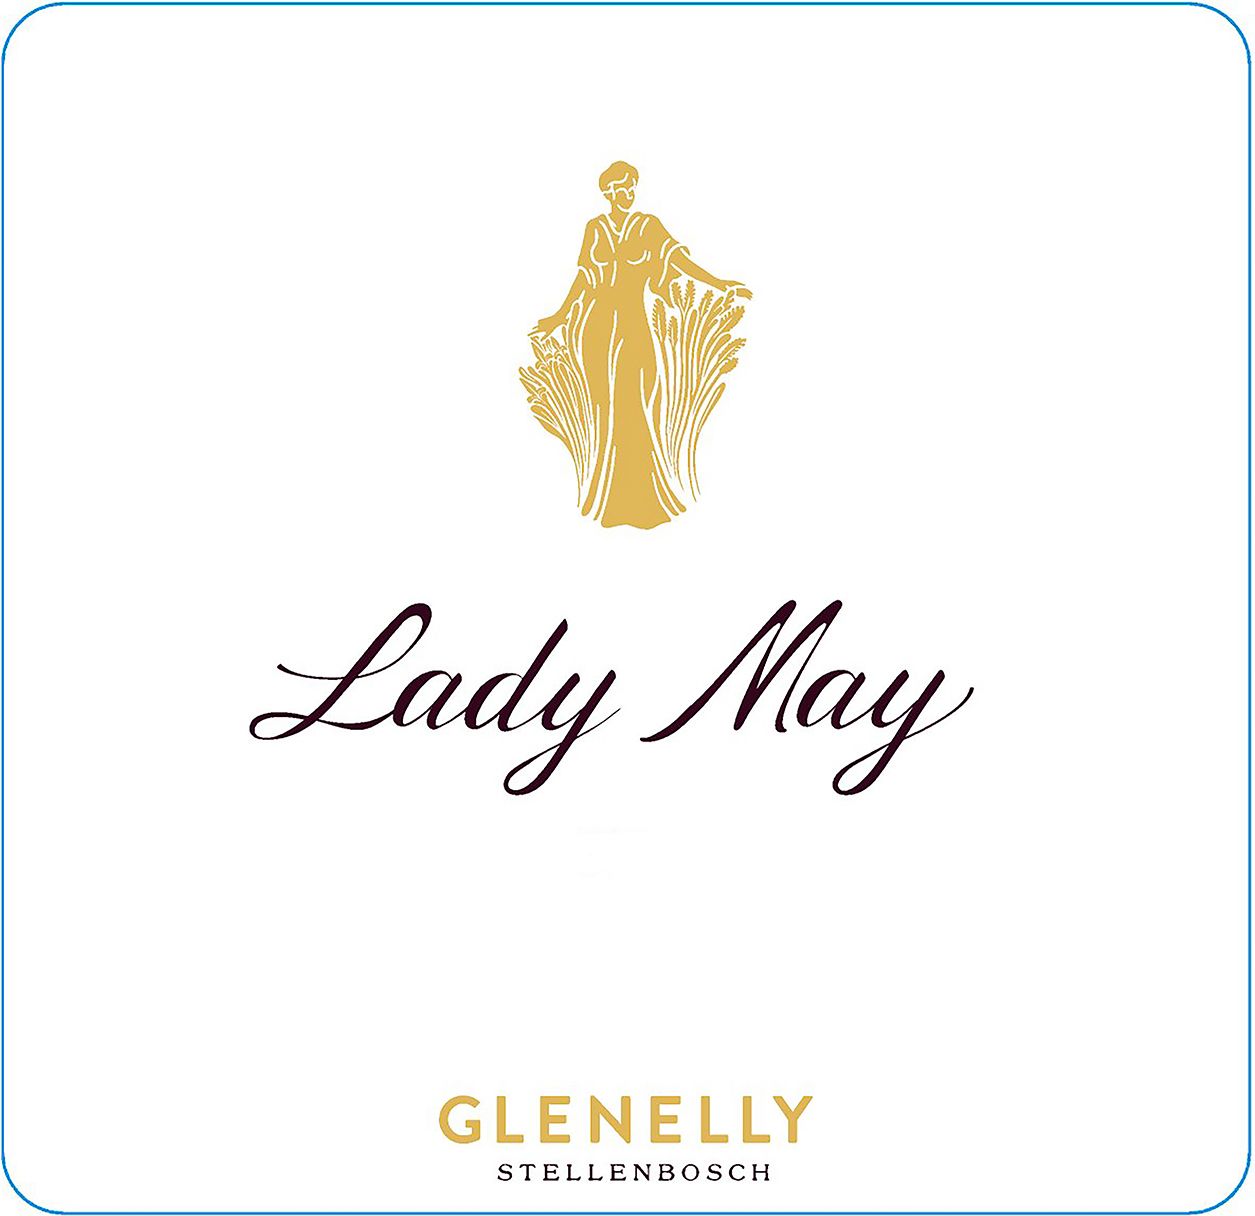 Glenelly Lady May 2013